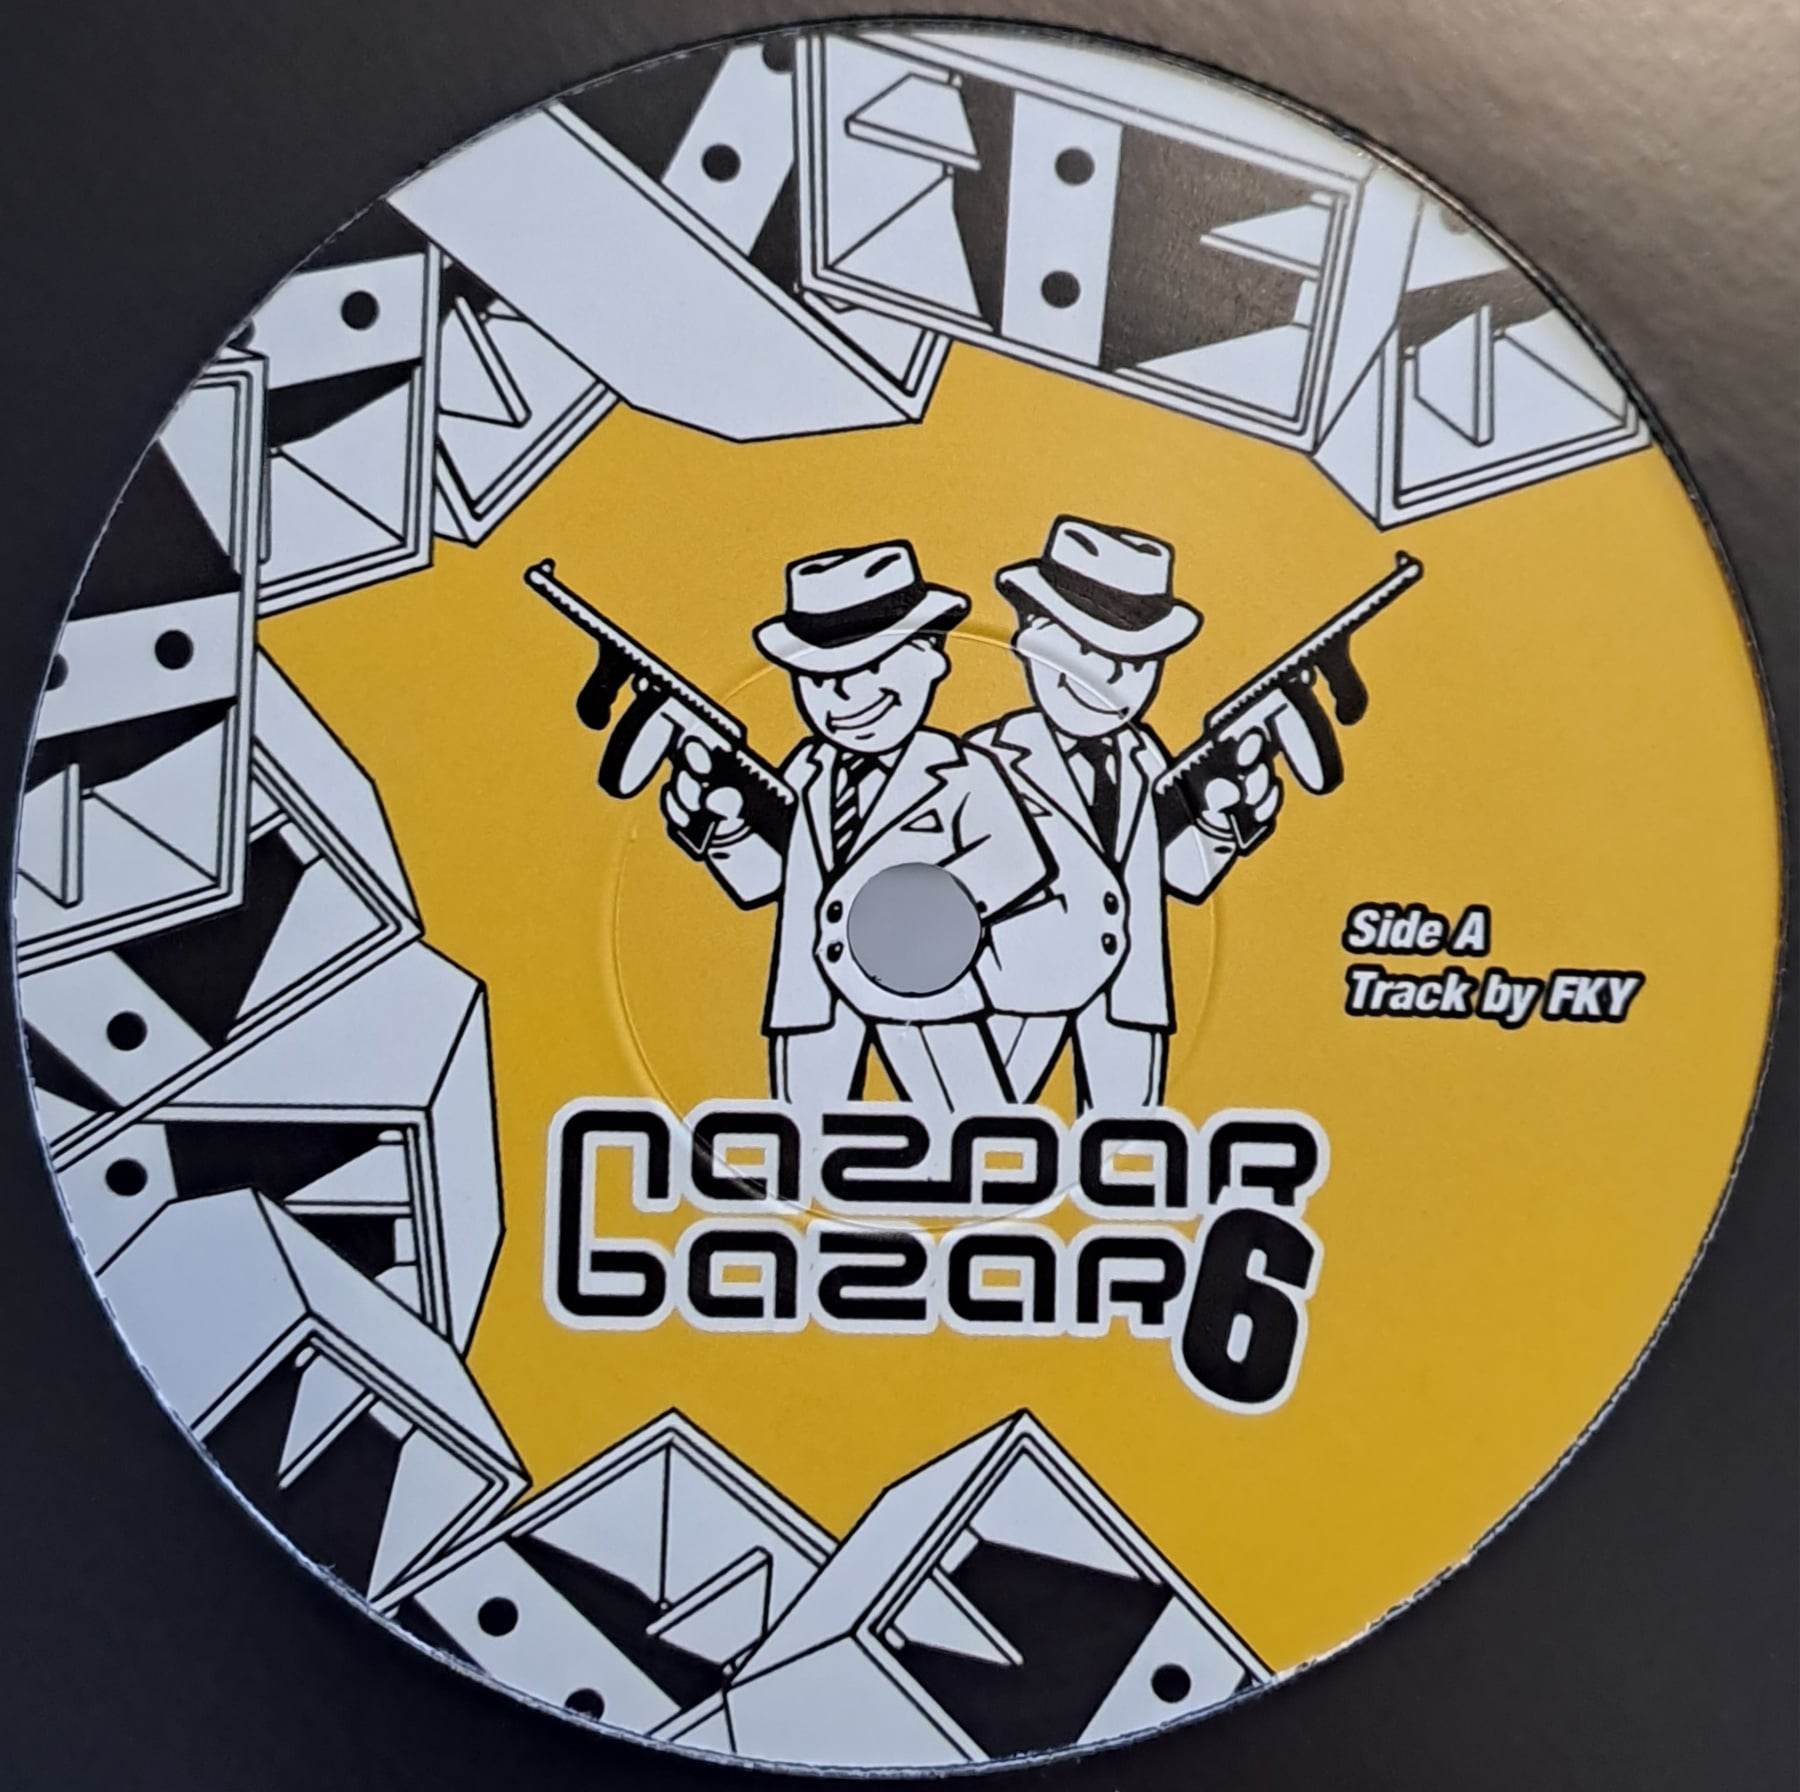 Nazdar Bazar 06 RP (dernières copies en stock) - vinyle freetekno